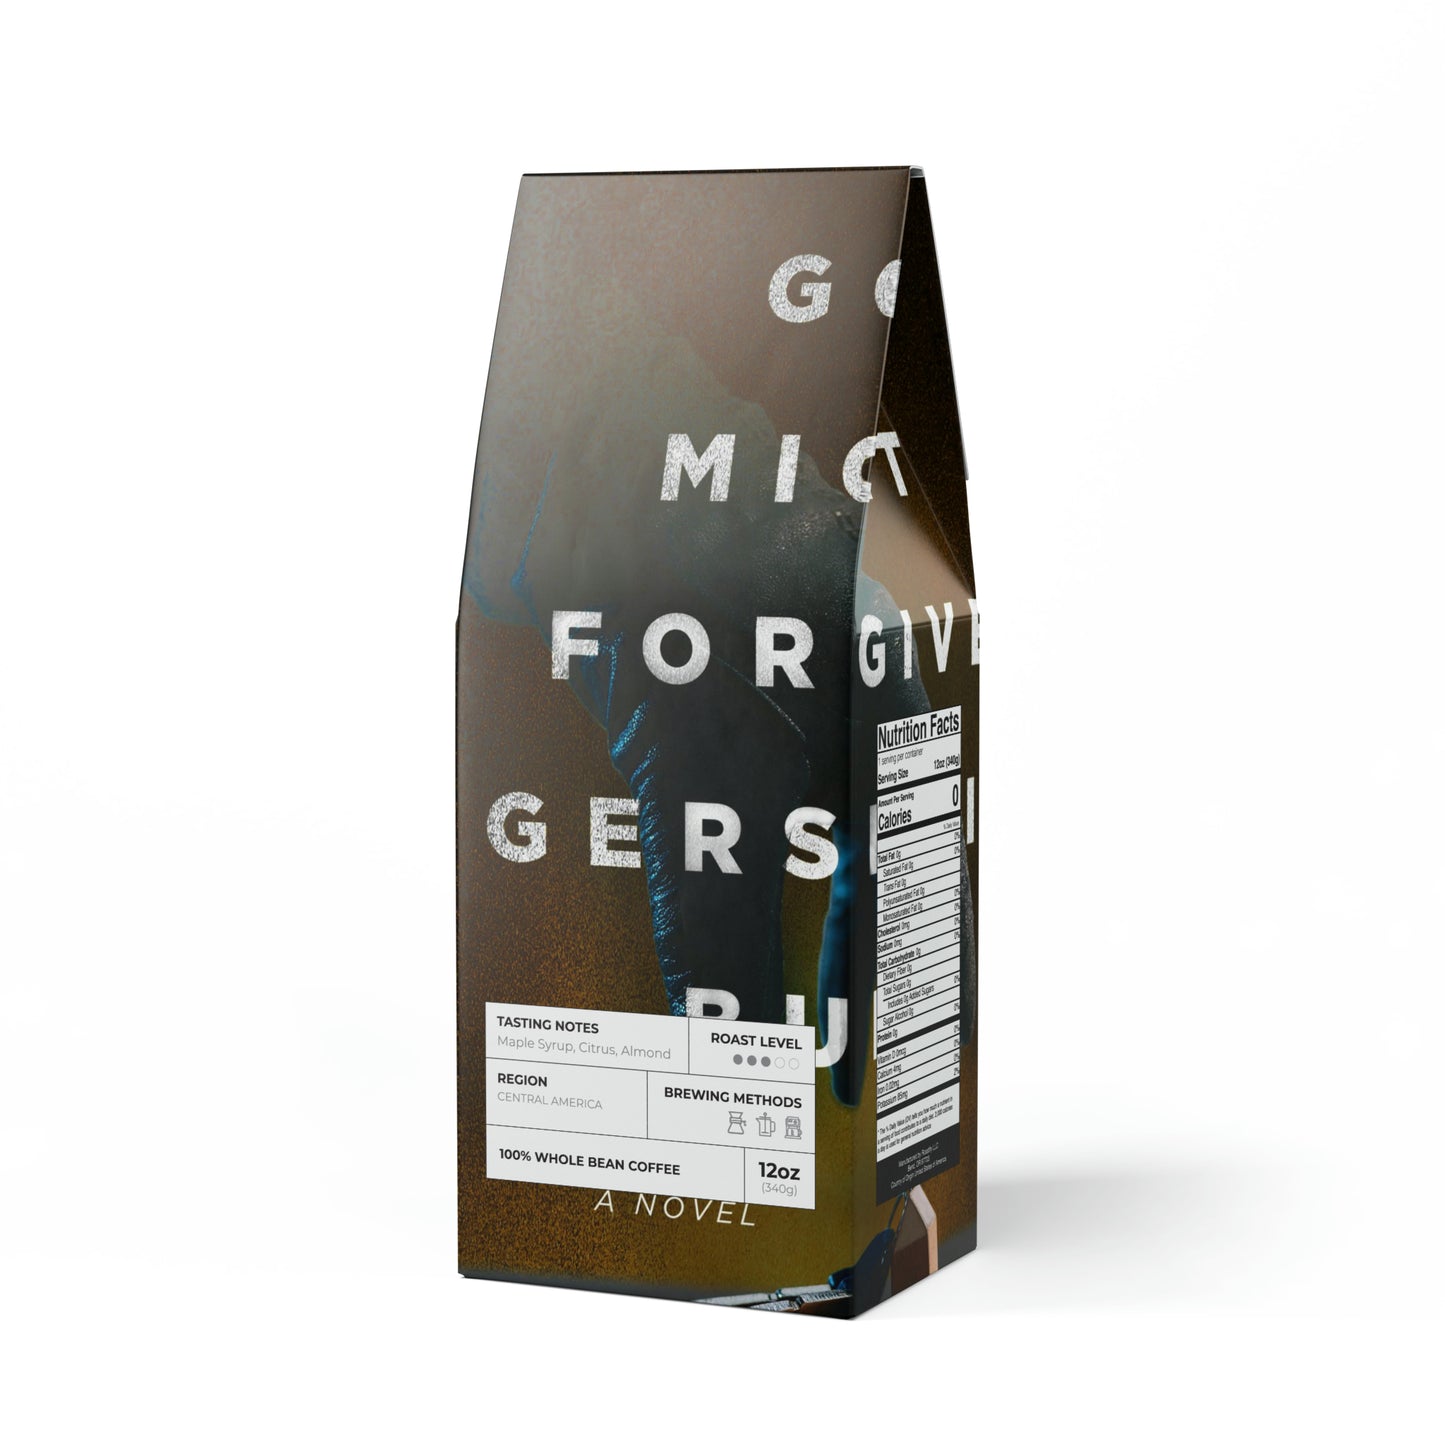 God Might Forgive Gershwin Burr - Broken Top Coffee Blend (Medium Roast)